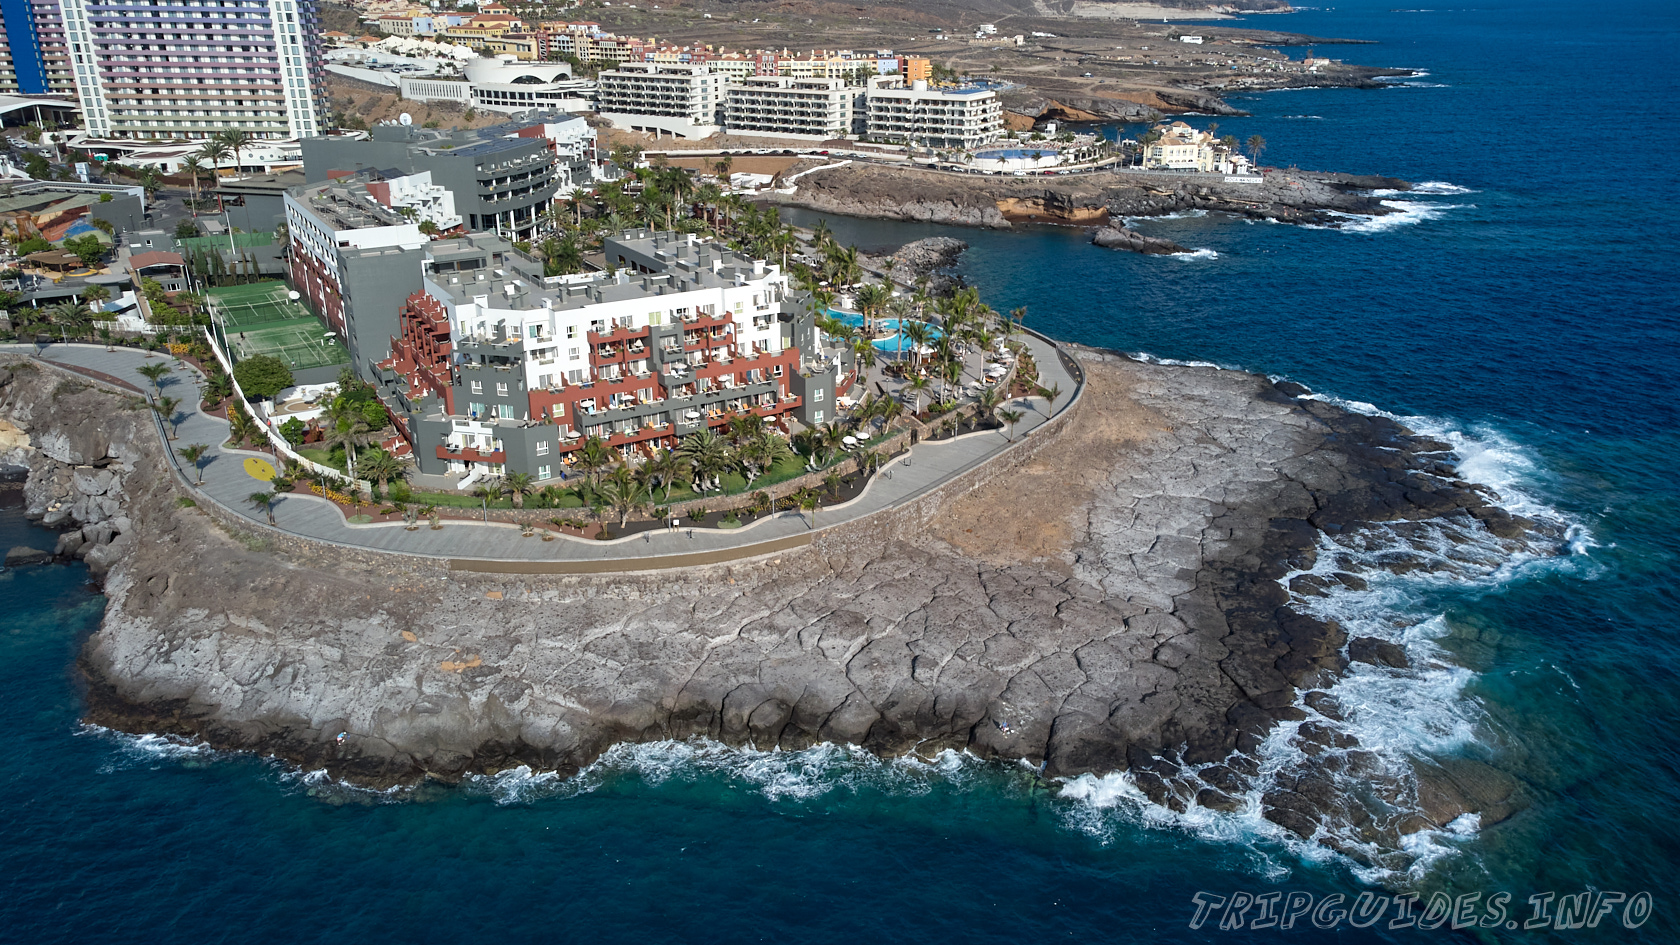 Отель Rock Hotel Tenerife 5* в Плайя Параисо - курорт на Тенерифе